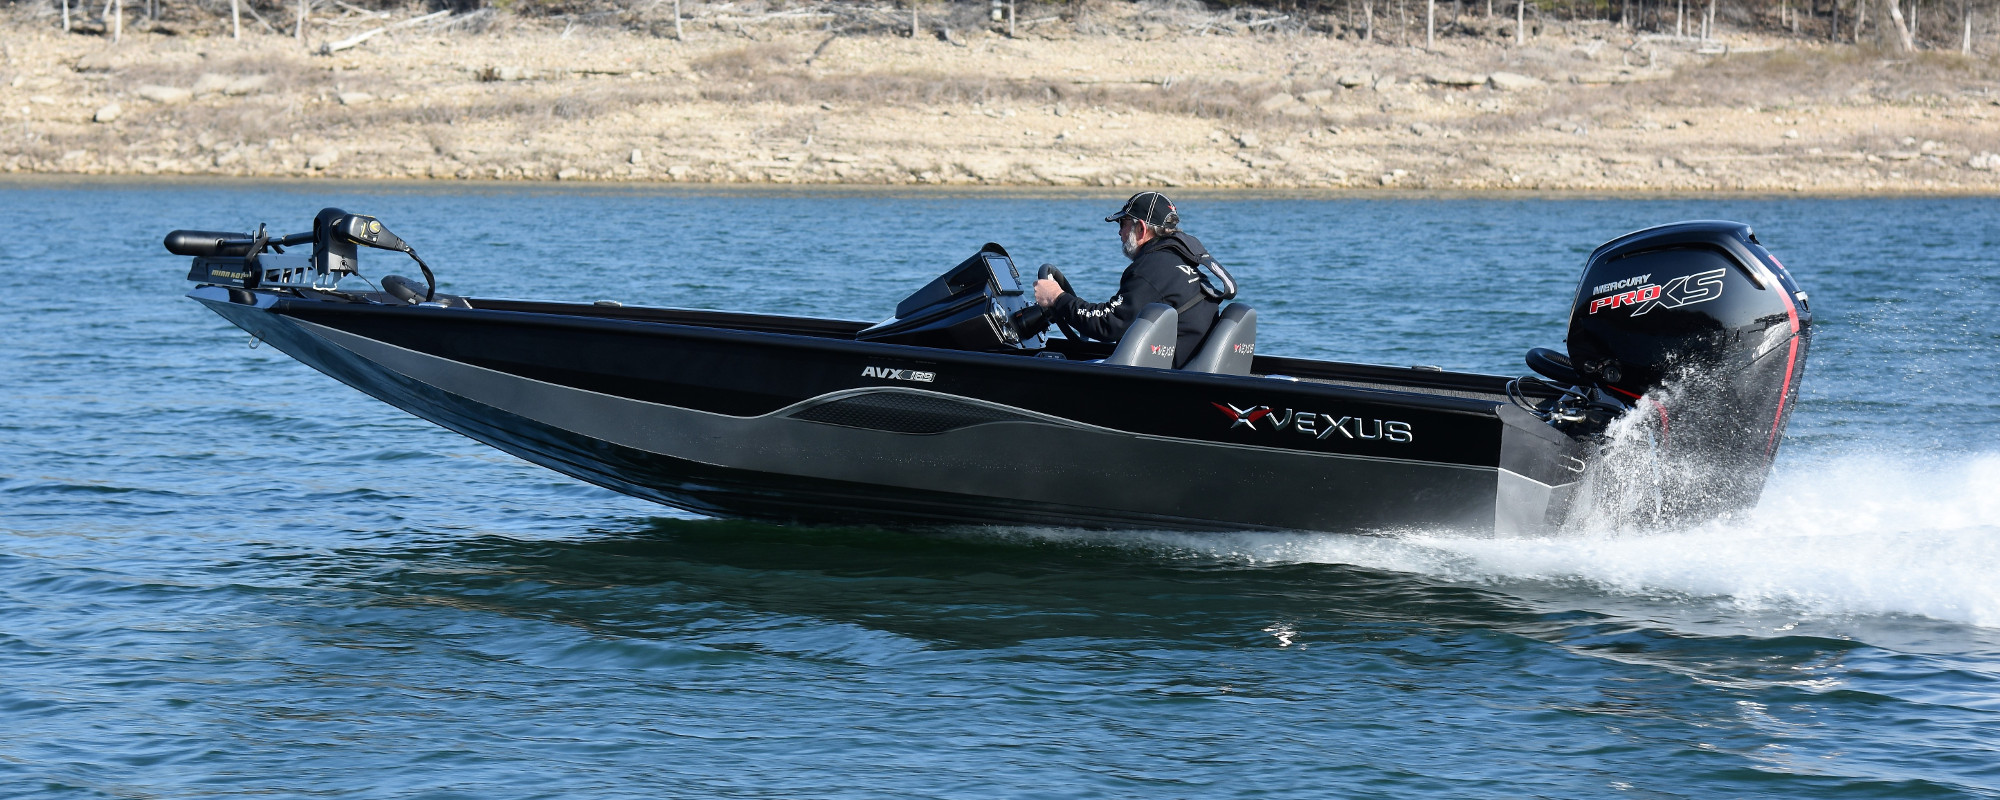 AVX189 | Vexus Boats | Fishing Boat Manufacturer